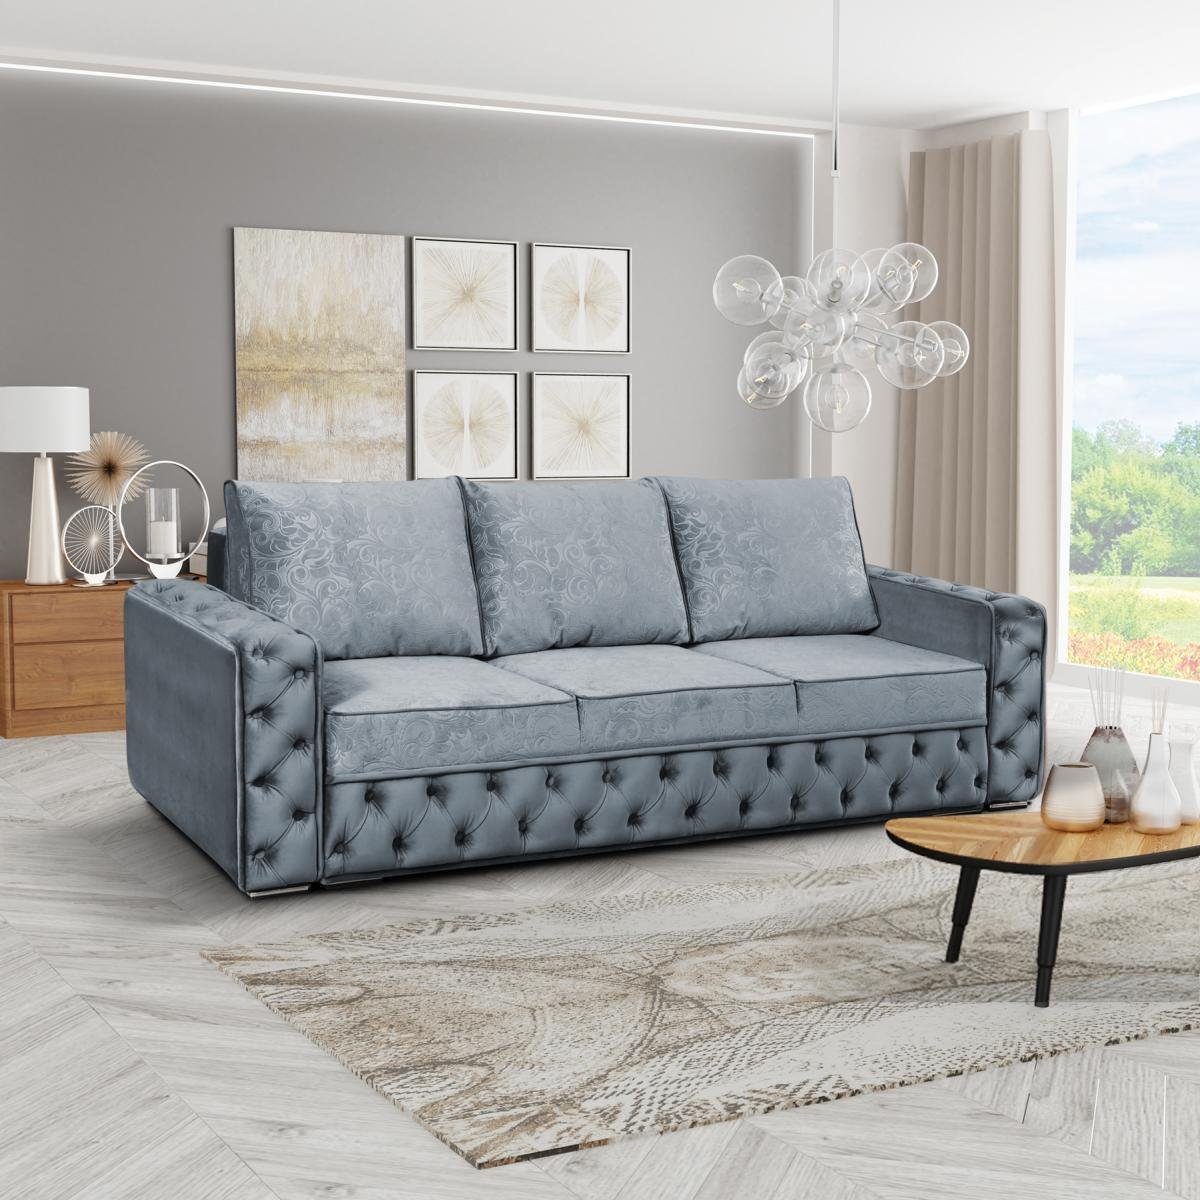 JVmoebel Sofa Chesterfield Design Couchen 4 Sitzplatz Textil Big Sofa Stoff, Made in Europe Blau